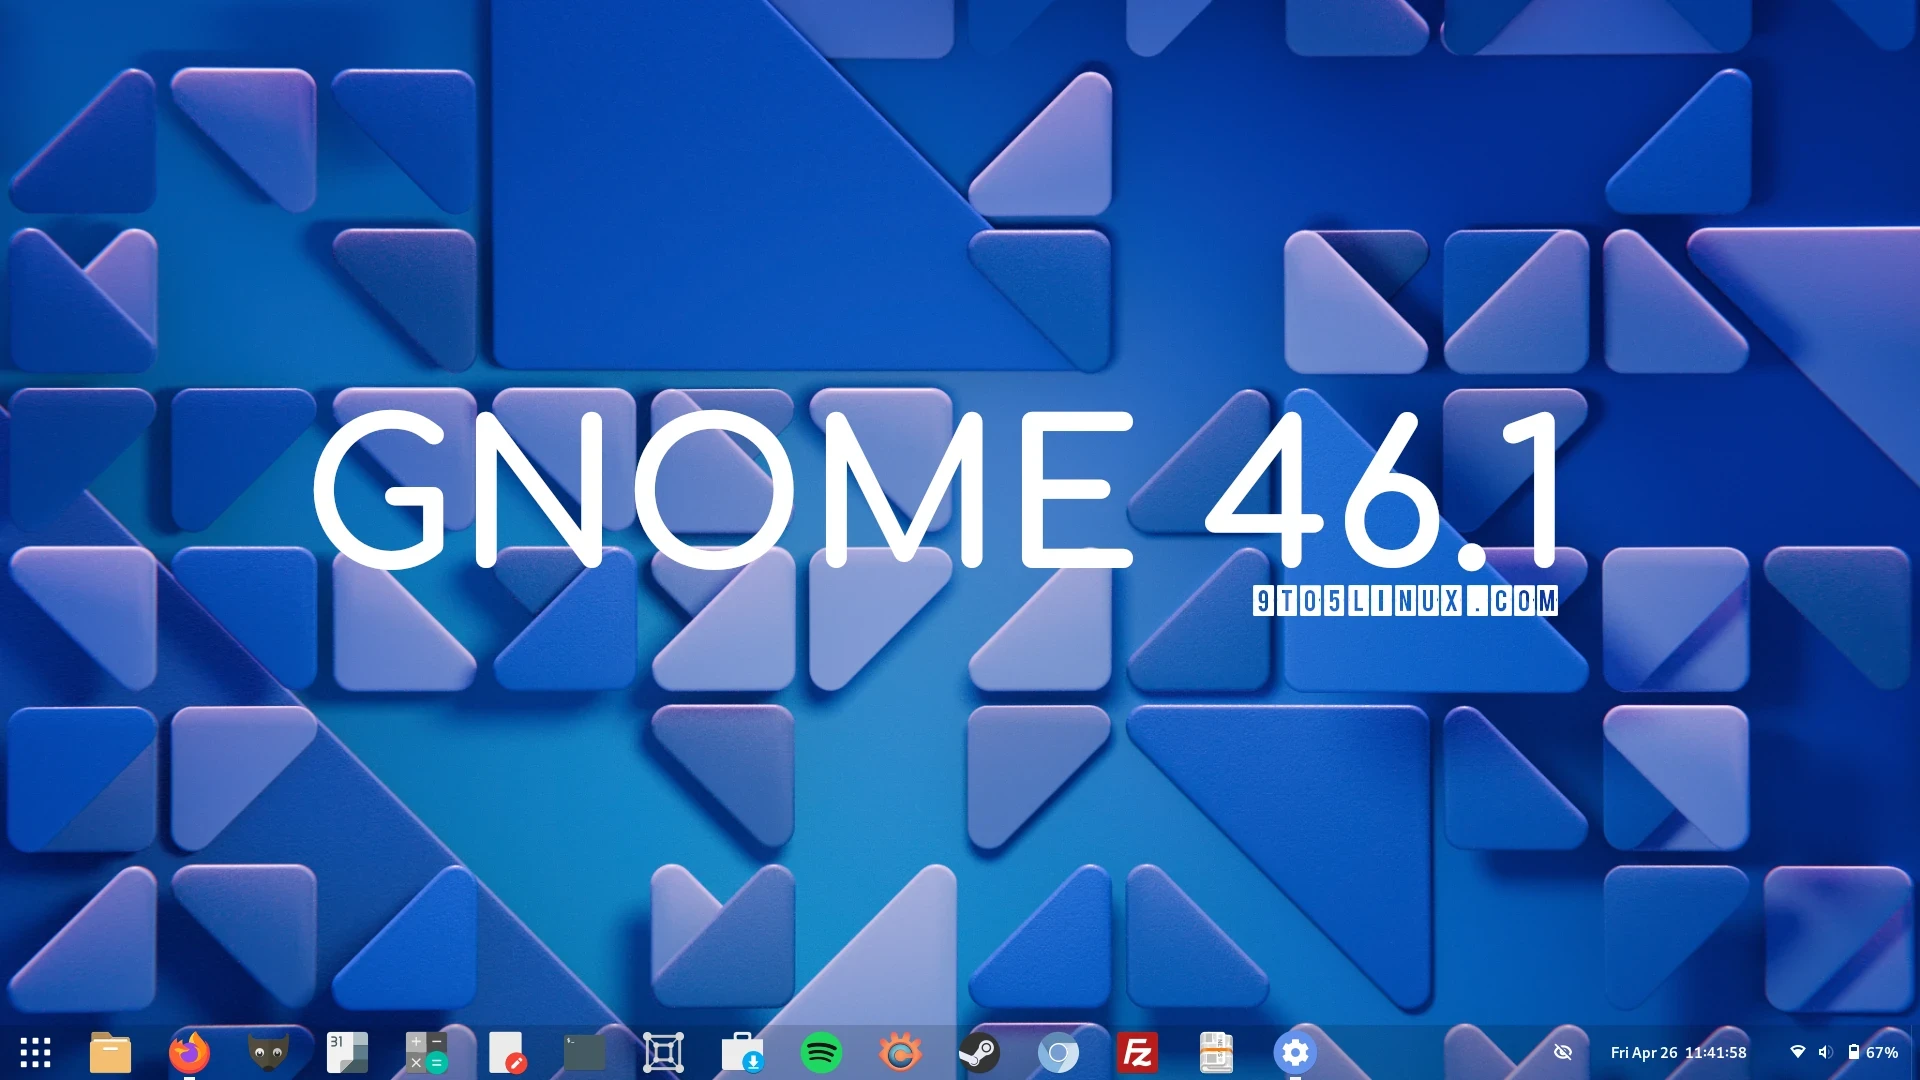 Screenshot of the GNOME 46 desktop environment.